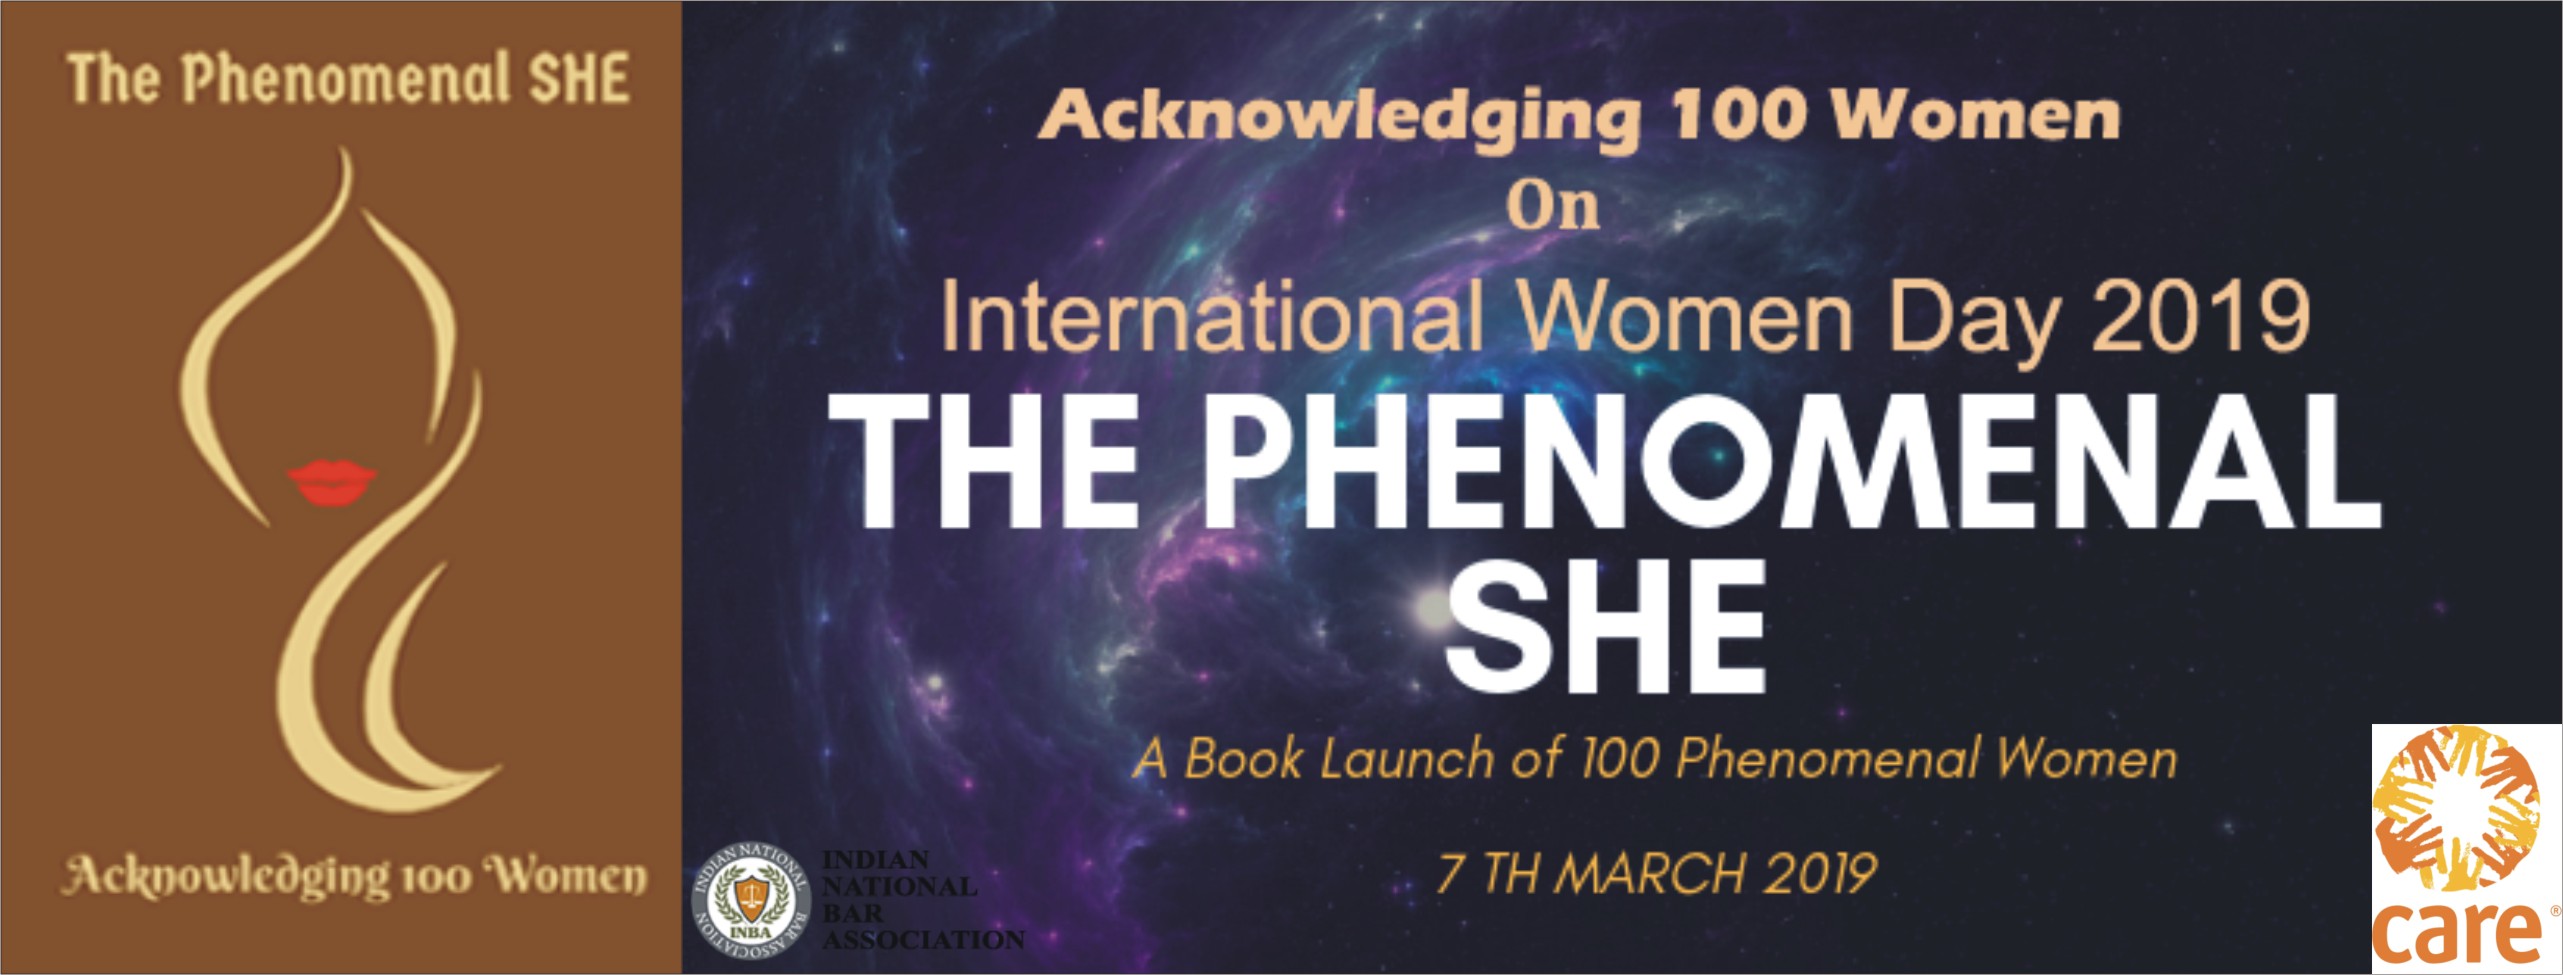 The Phenomenal She- A Book Launch by INBA on International Women Day